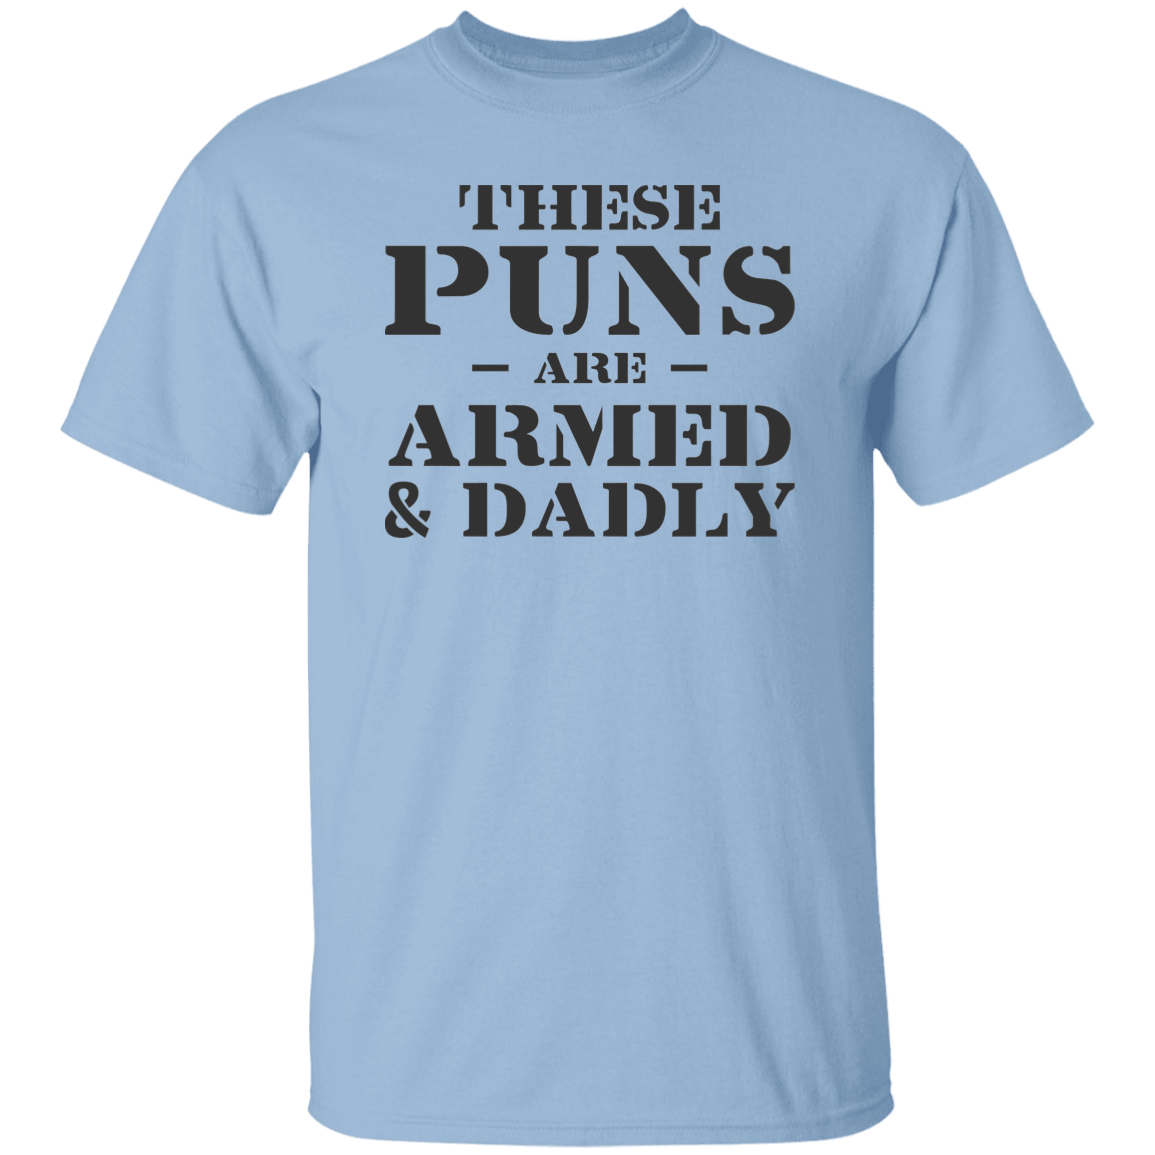 Theses PUNS ....T-Shirt